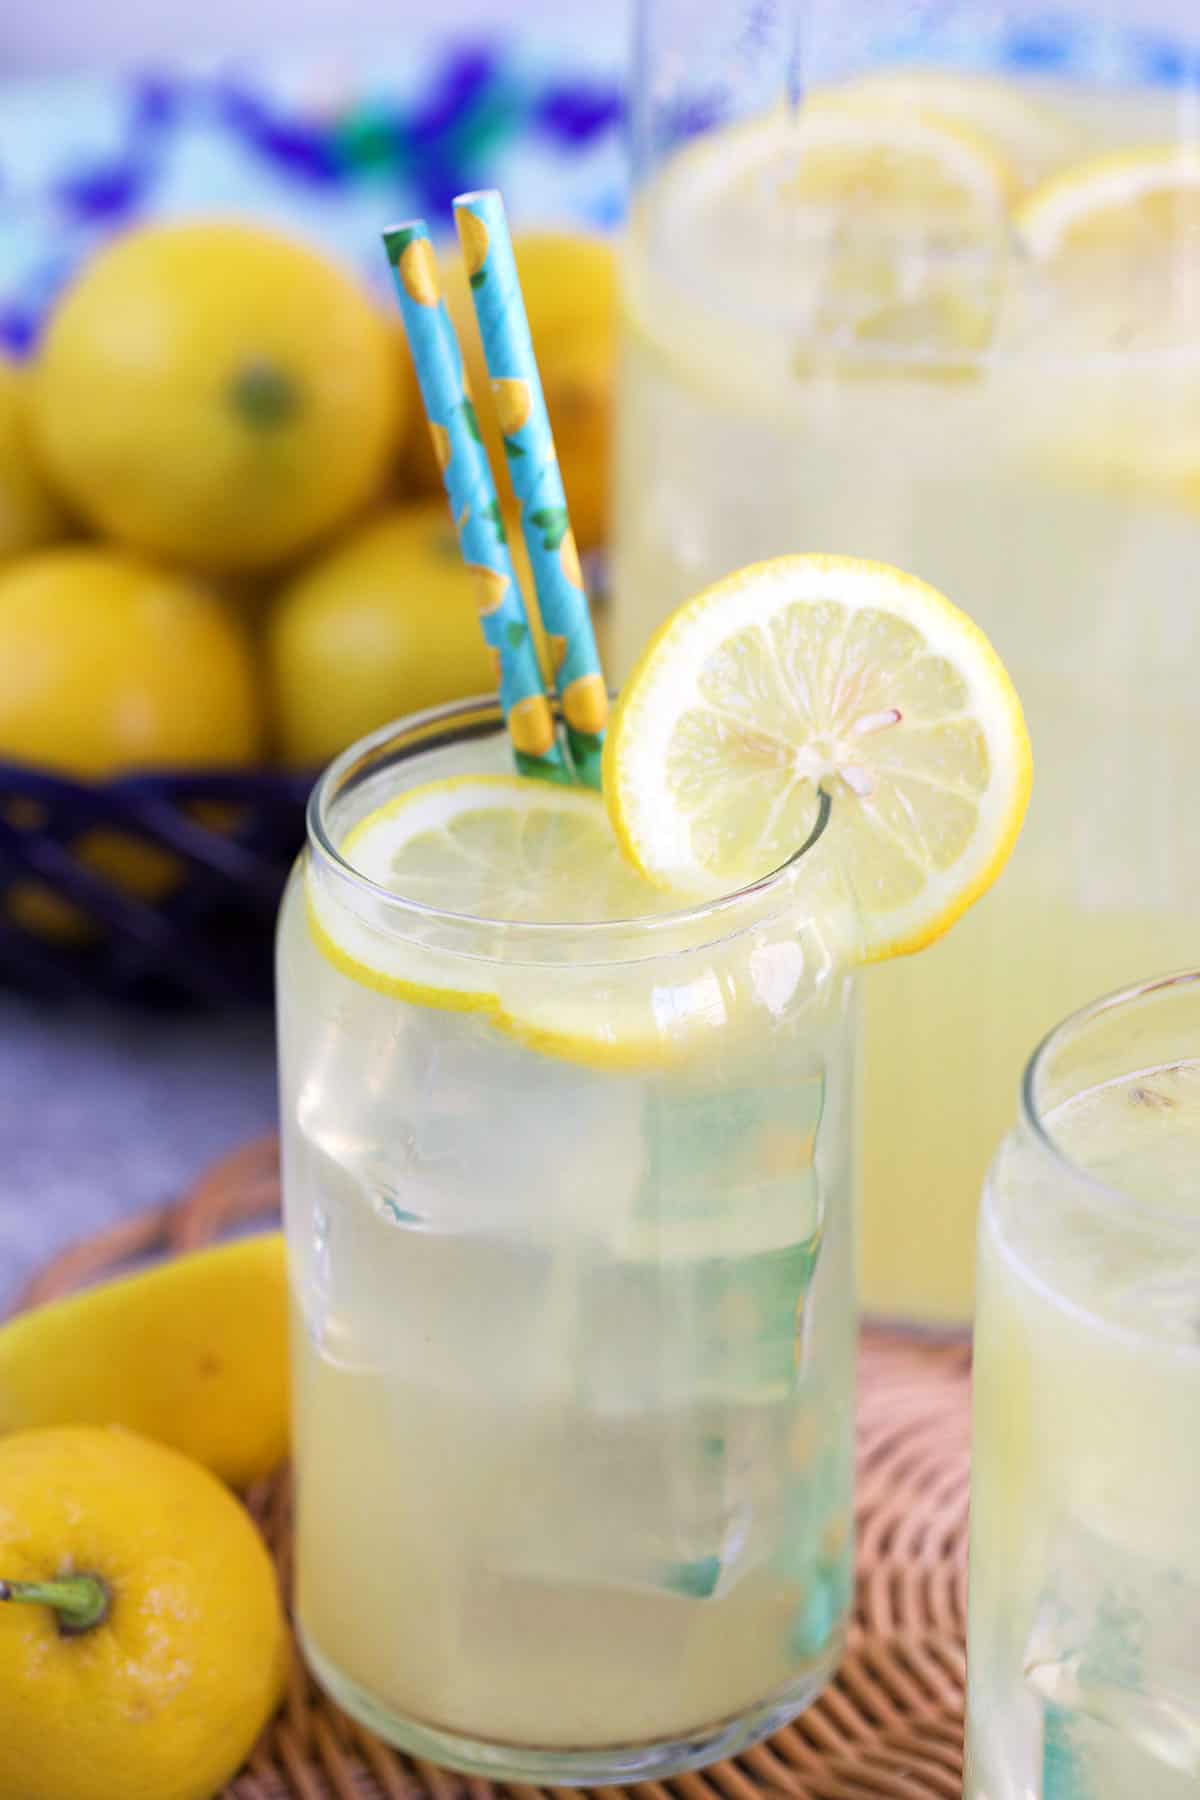 glass of lemonade with a lemon slice and blue straws.